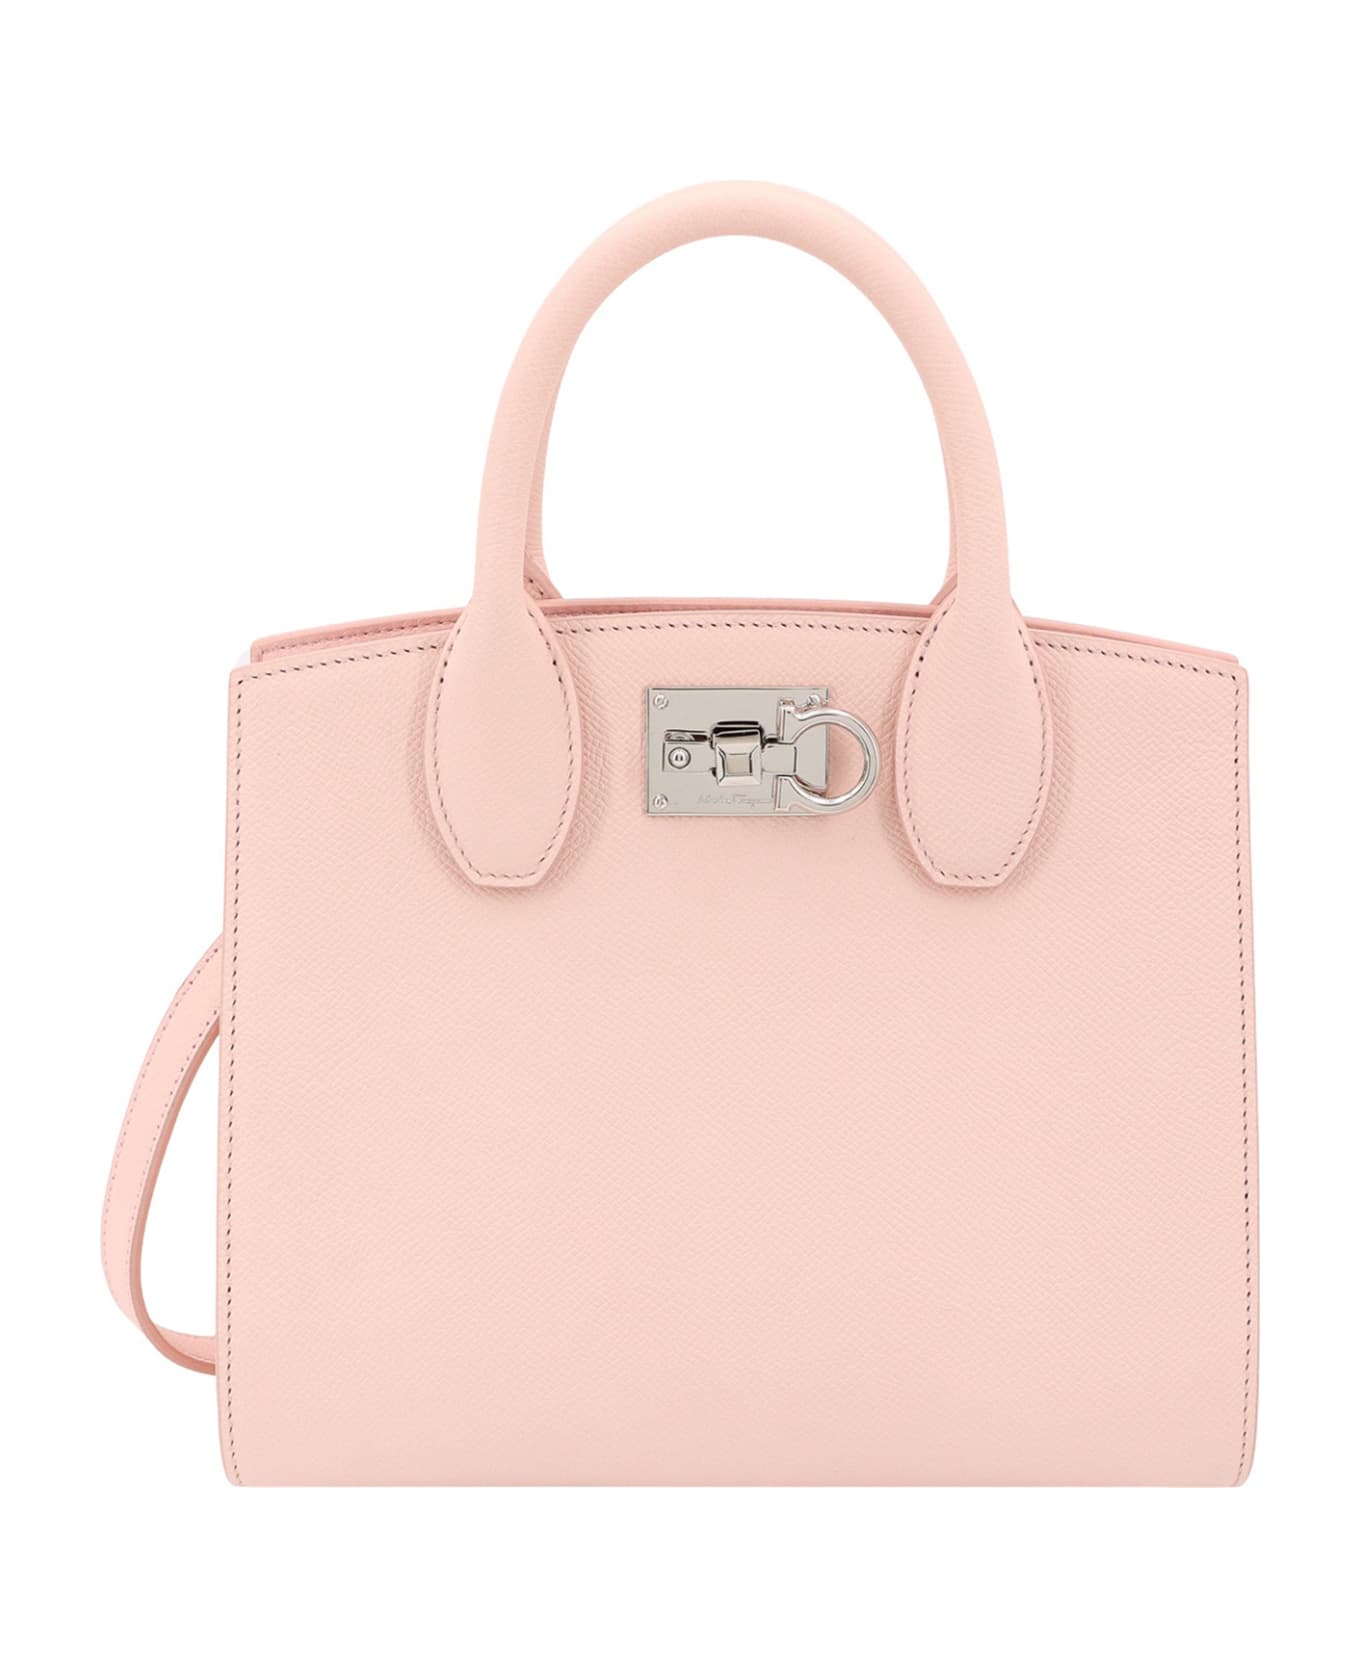 Ferragamo Studio Handbag - Pink トートバッグ